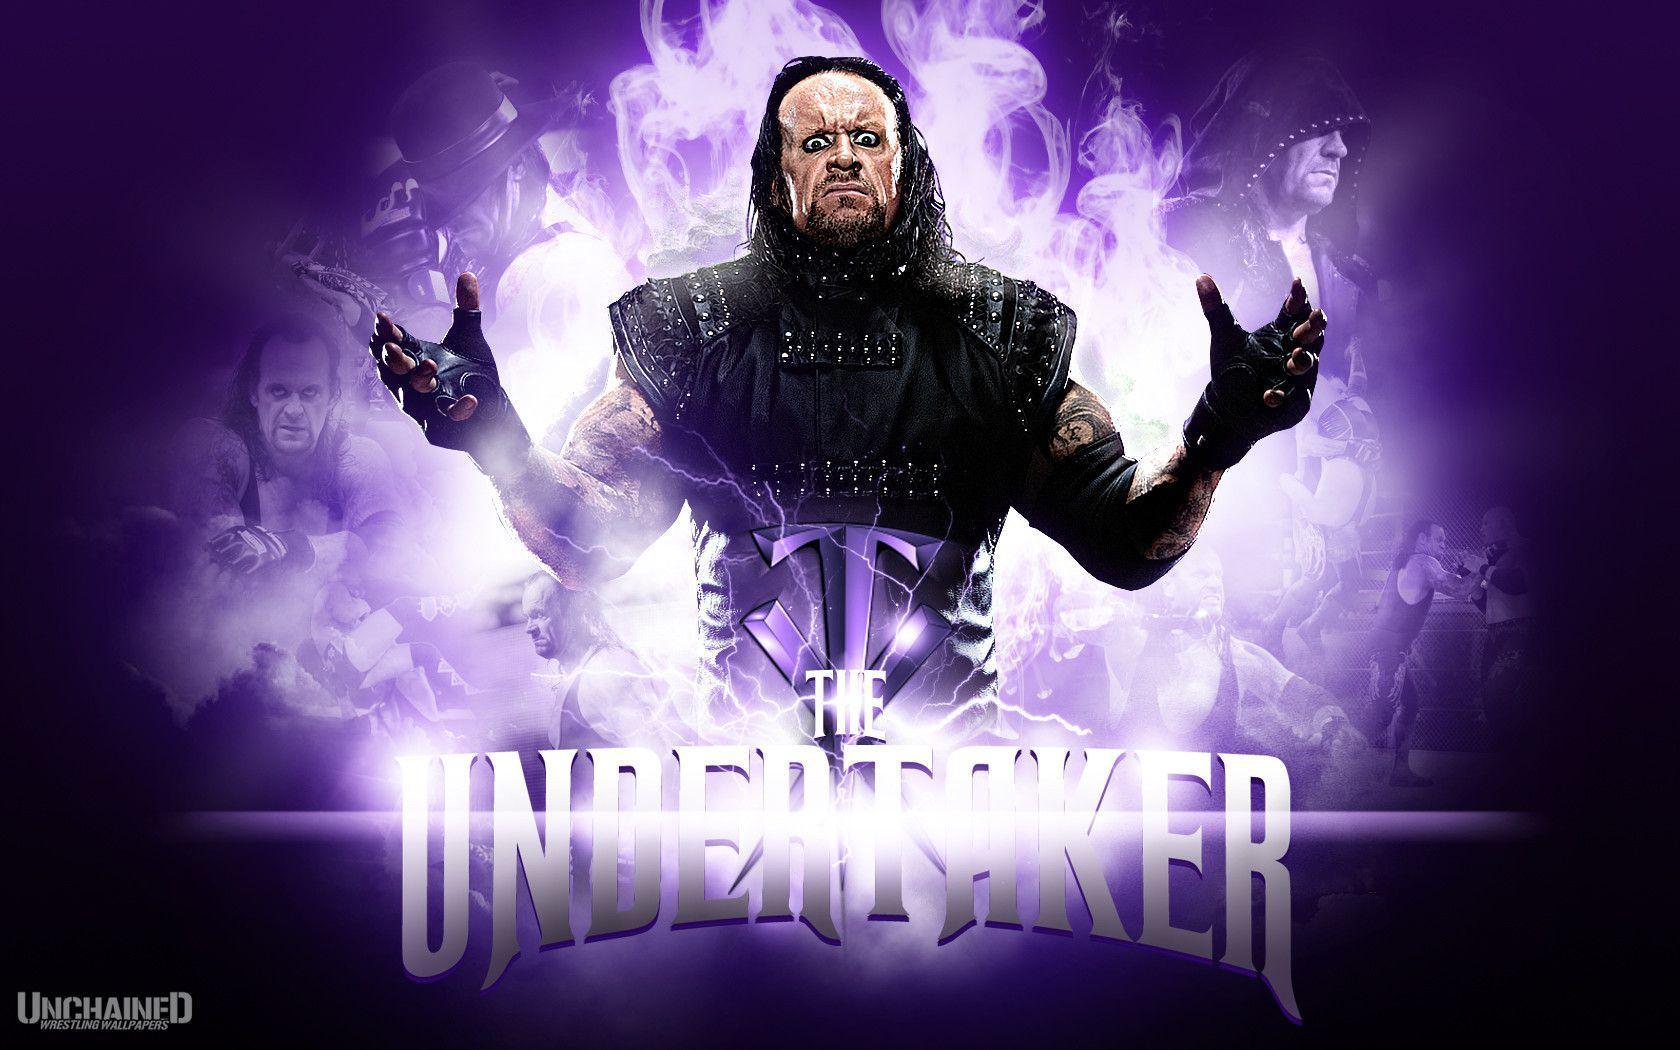 WWE Undertaker "The Phenom" Wallpaper Unchained WWE.com WWE